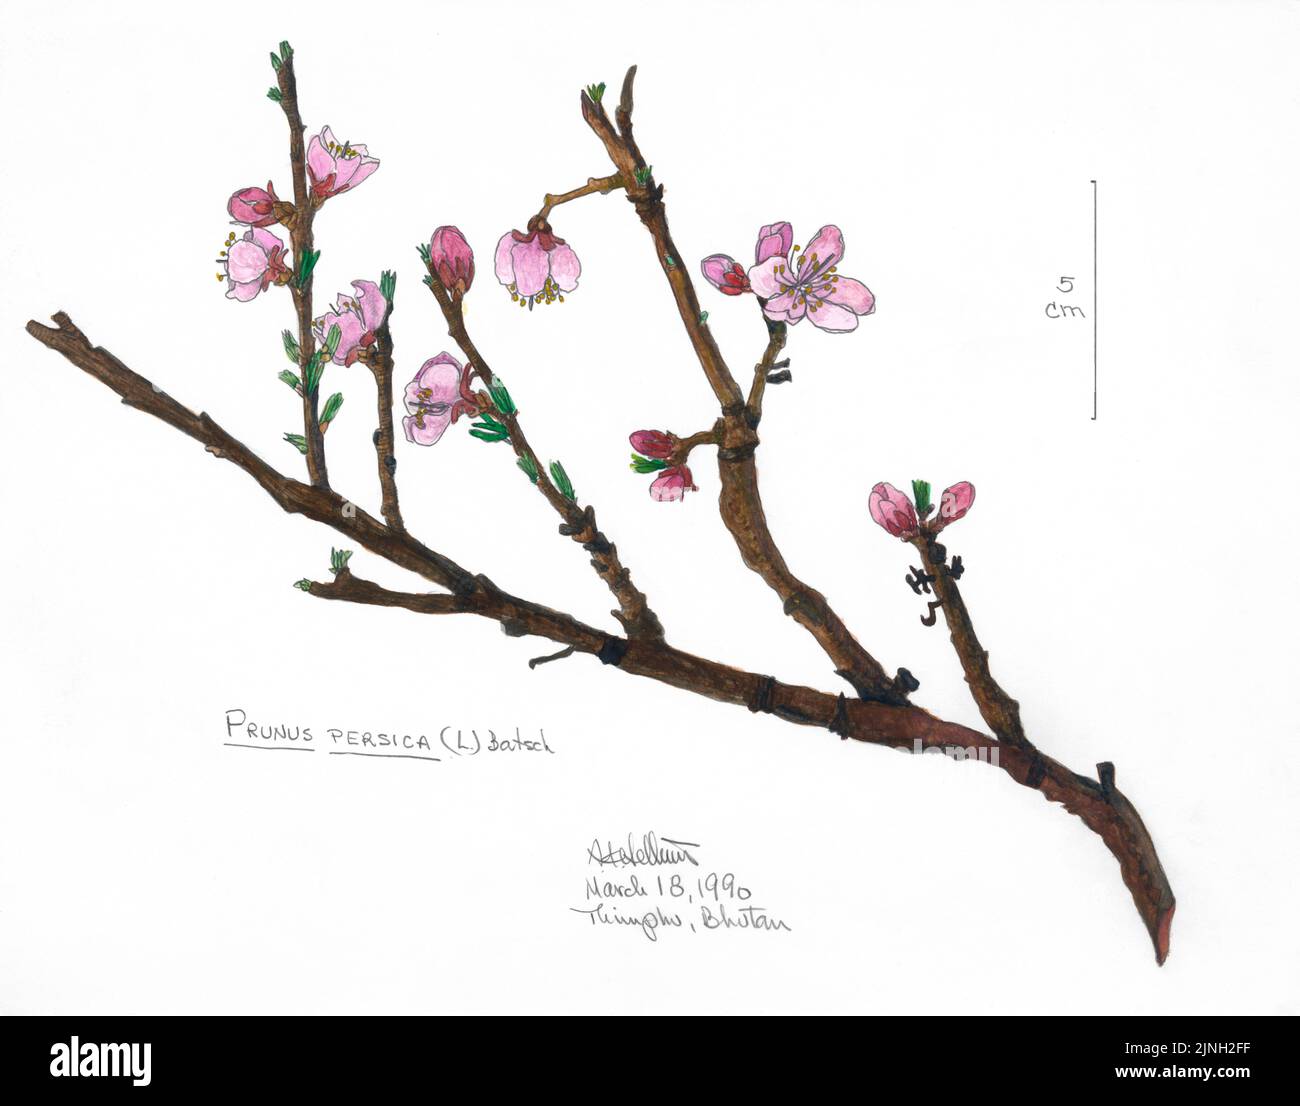 Prunus persica, L. Batsch. painted by A. Kåre Hellum at Thimphu, Bhutan March 18, 1990 Stock Photo